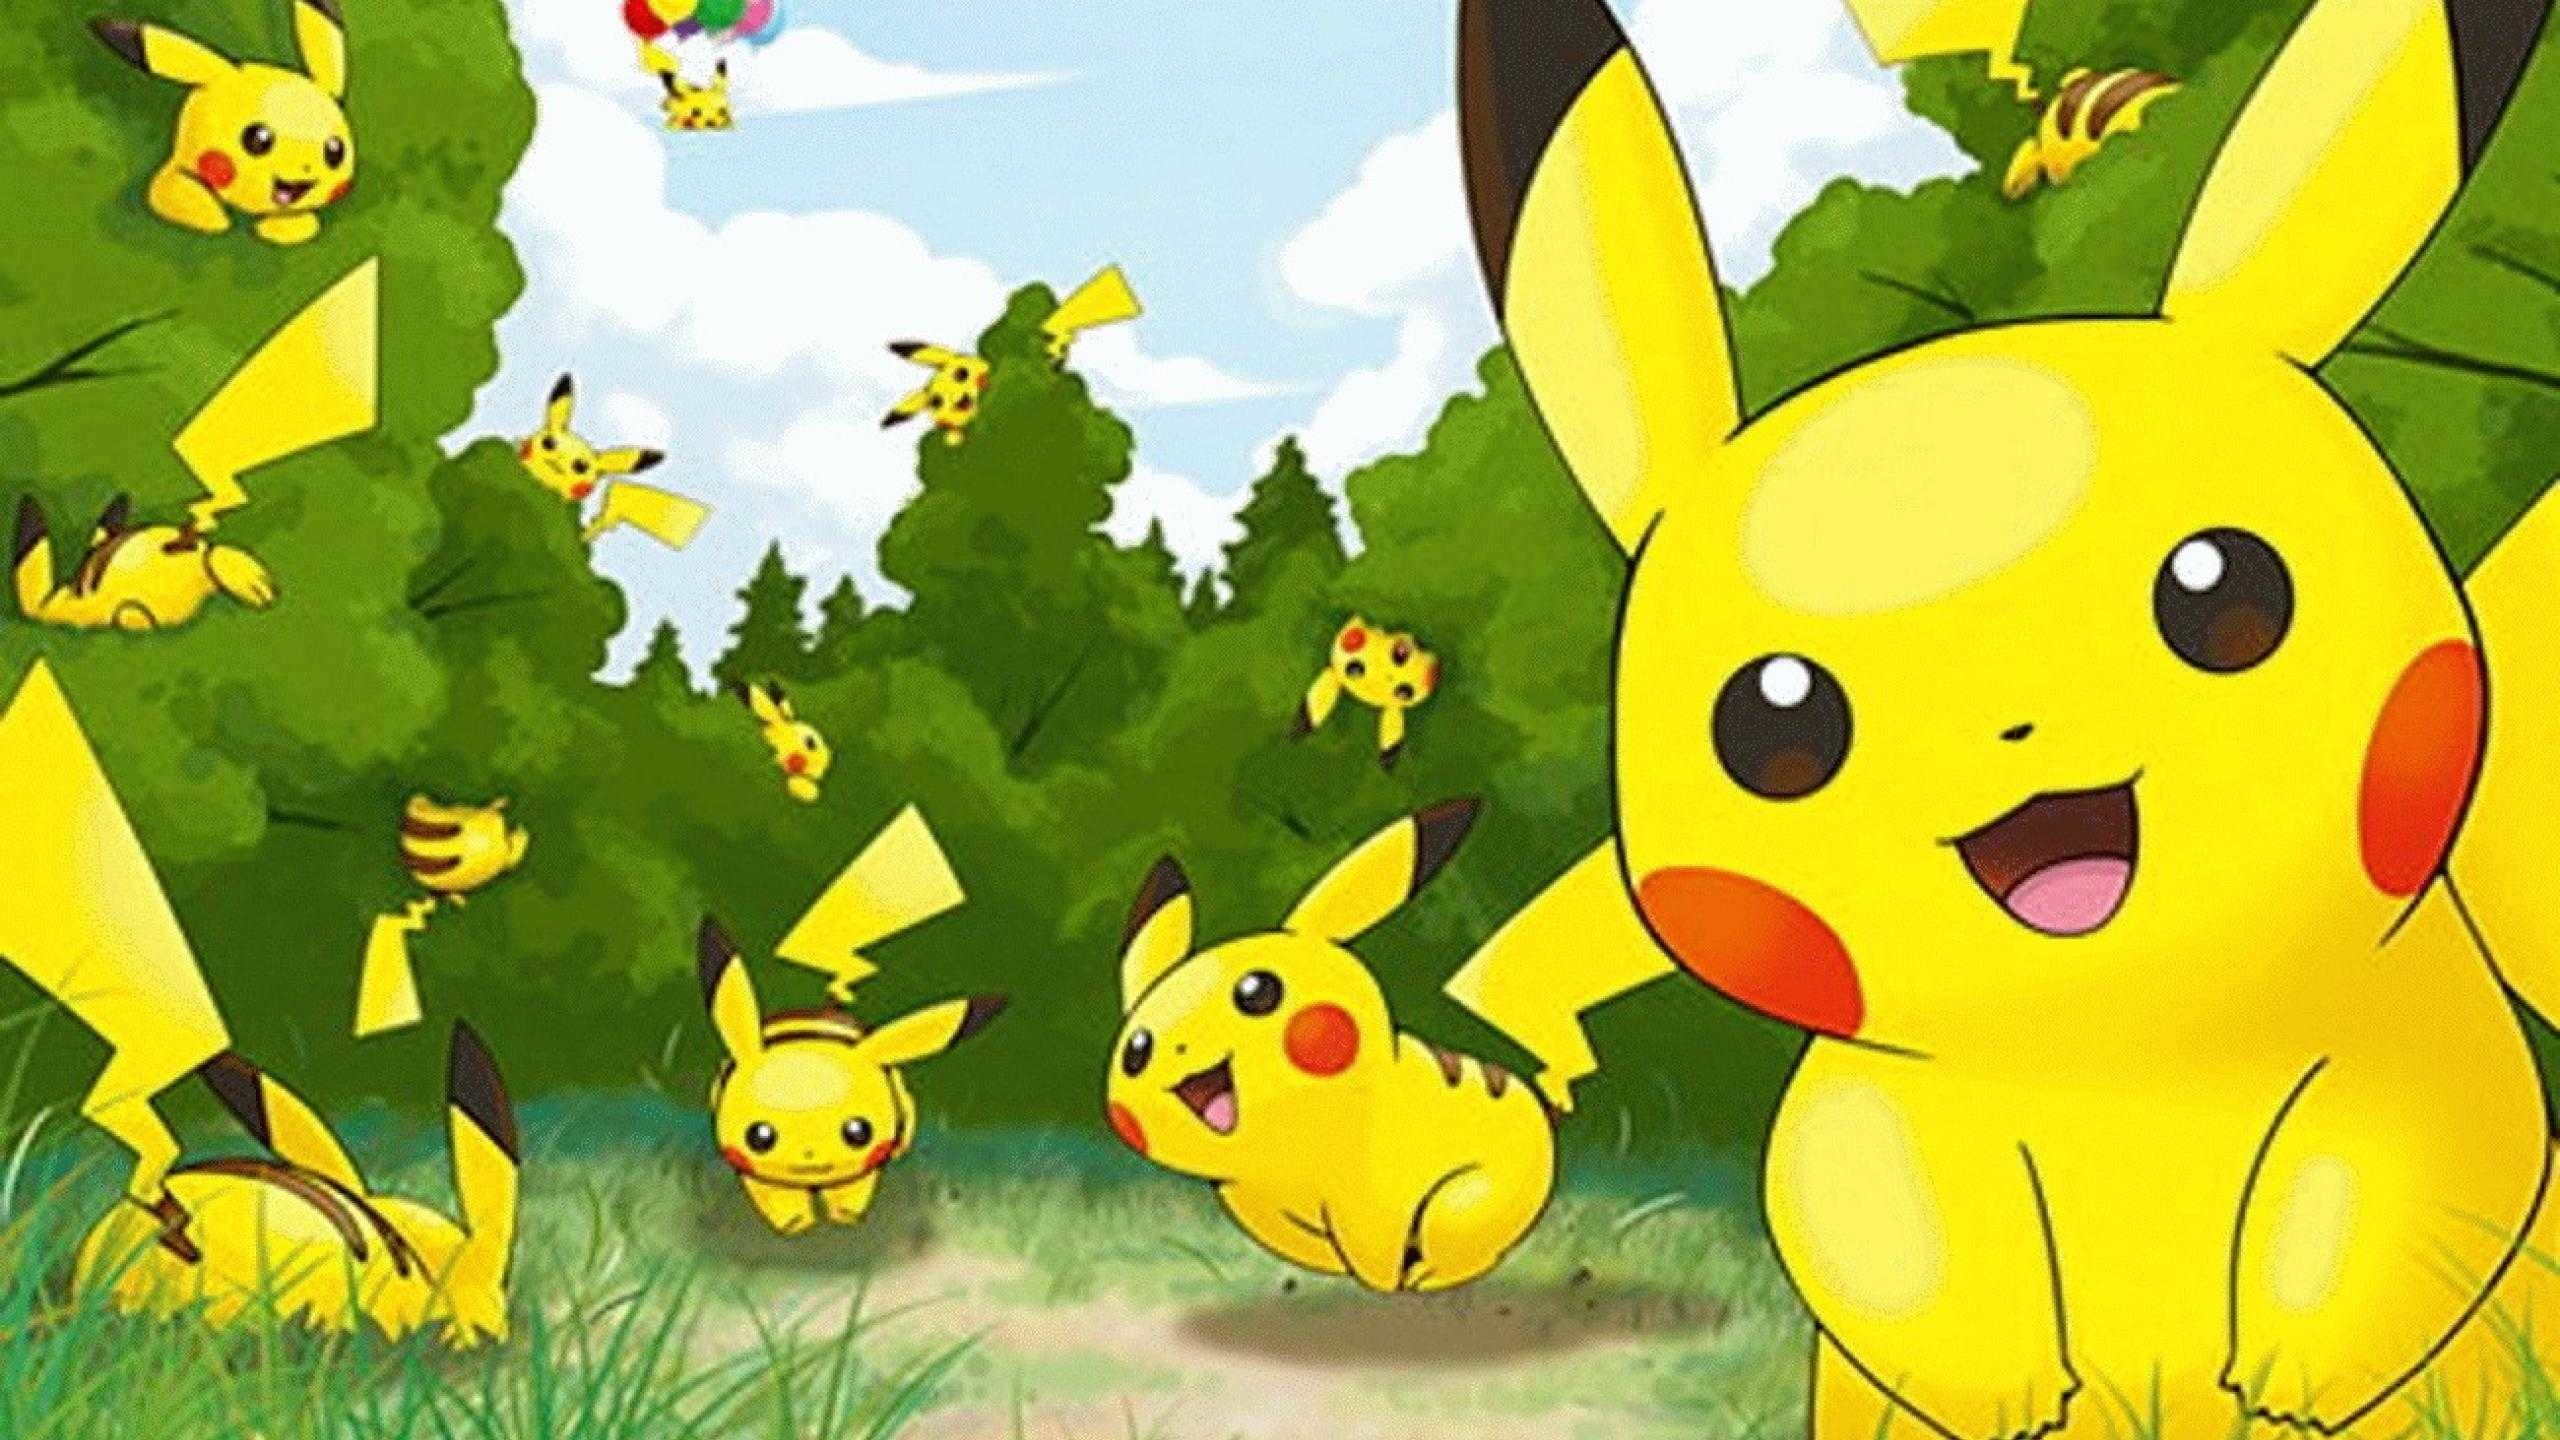 Download Pikachu 3d Investigating Detective Pikachu Wallpaper  Wallpapers com